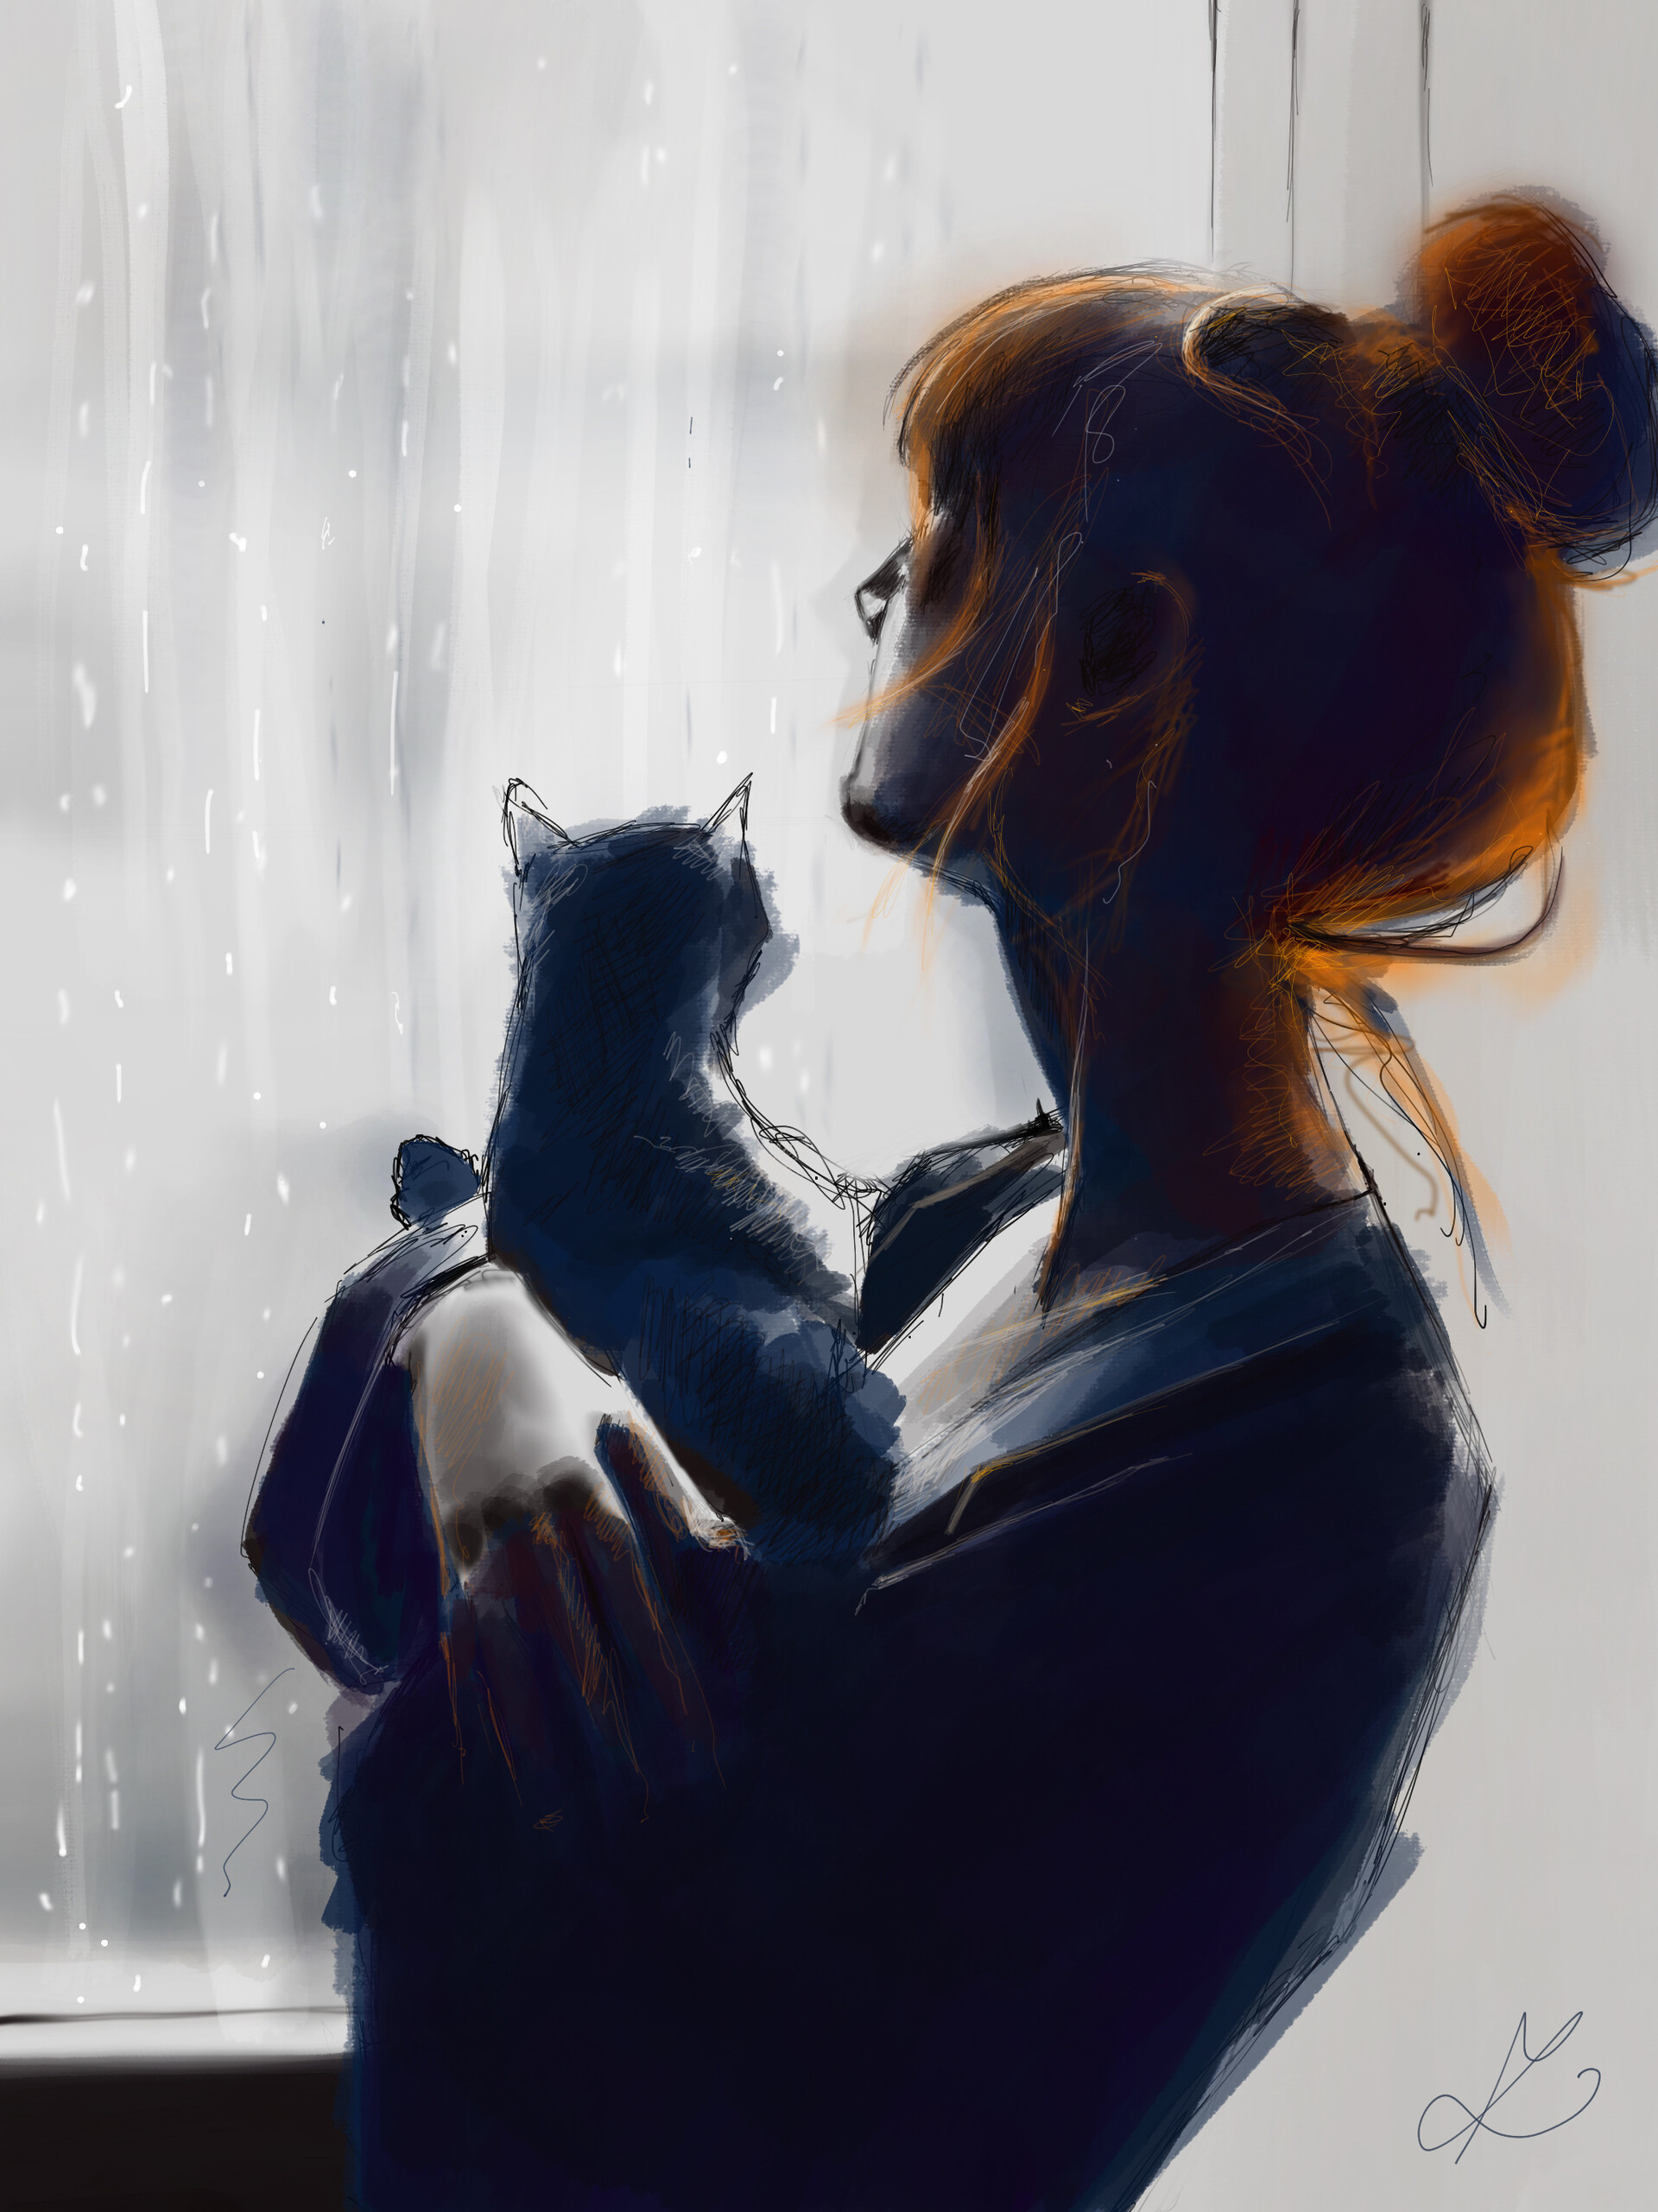 ArtStation - Watching the rain together